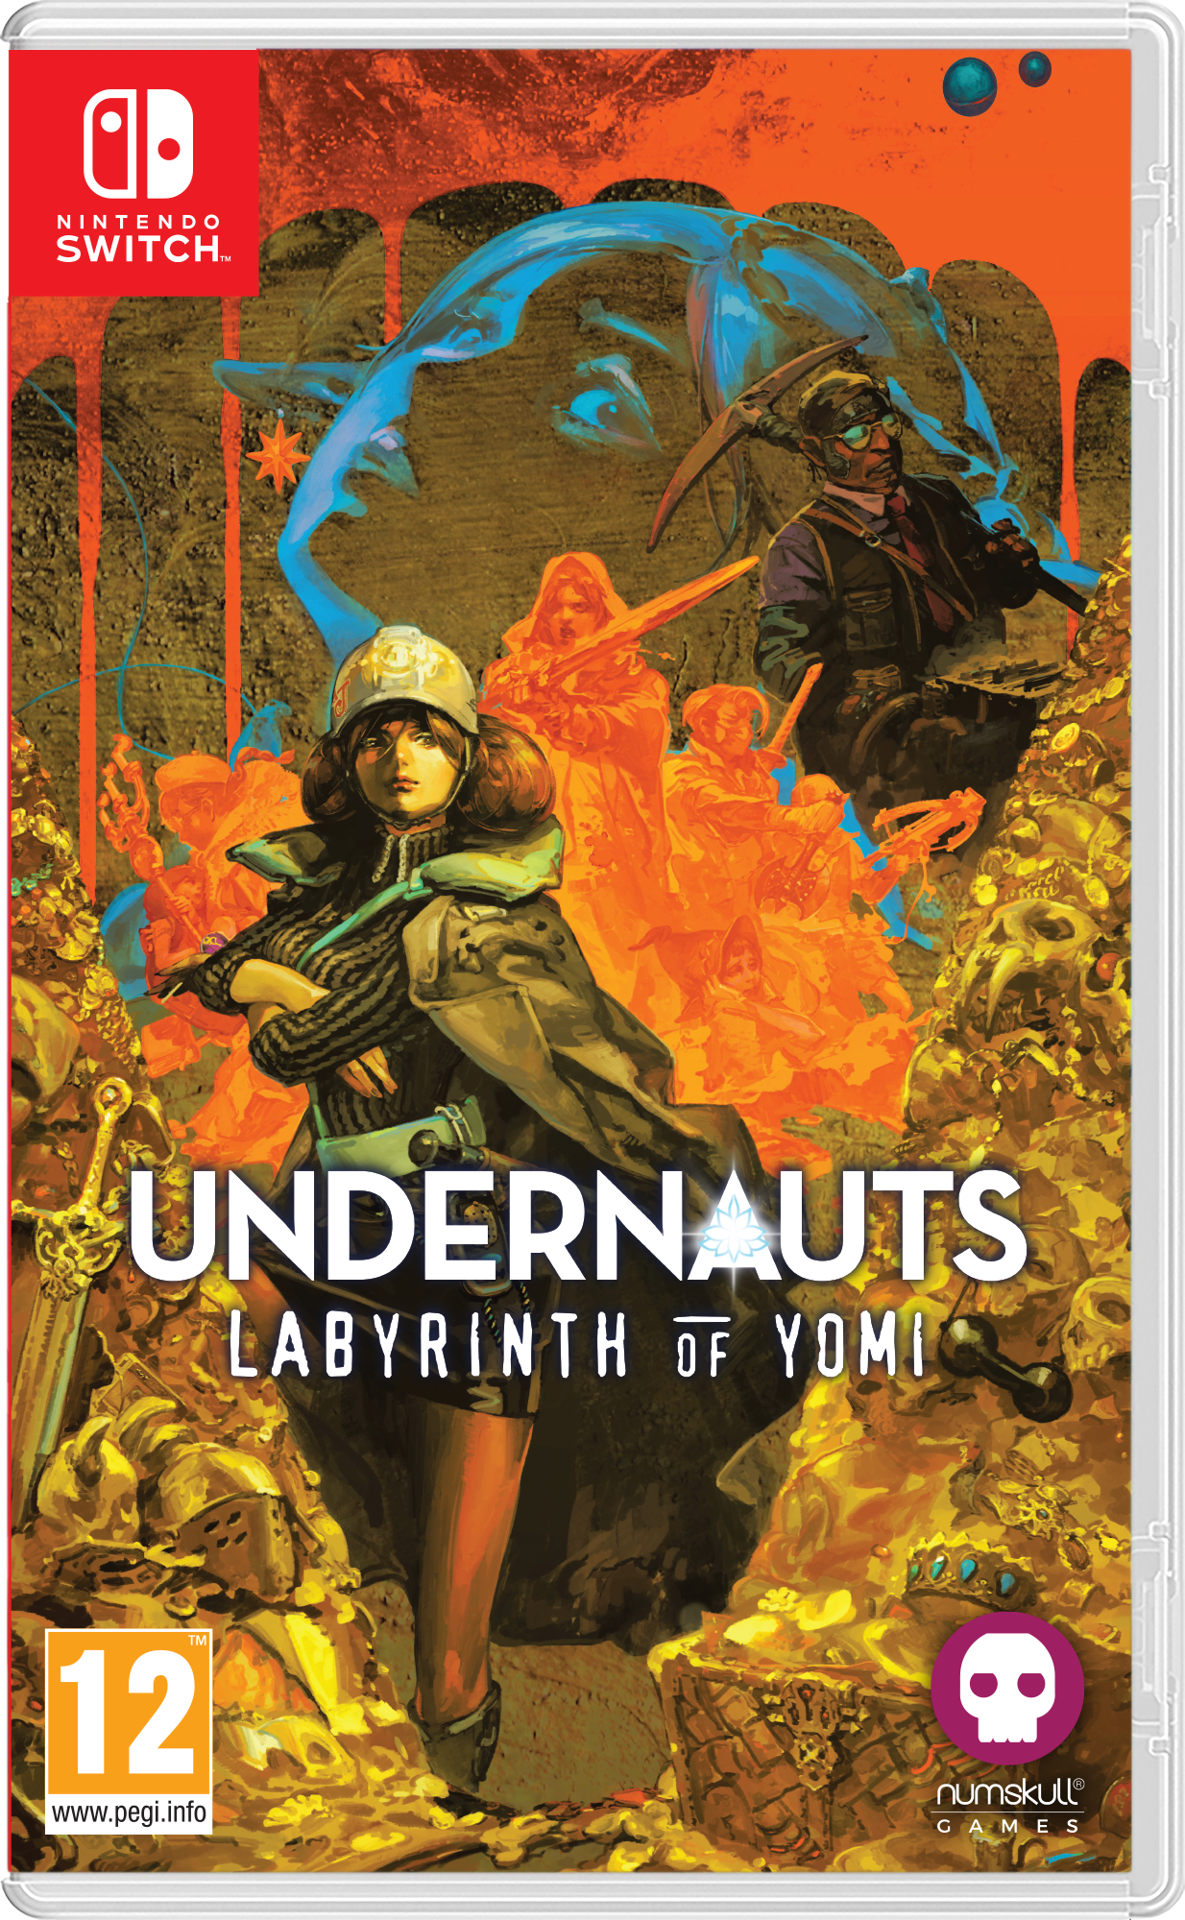 Undernauts : Labyrinth of Yomi